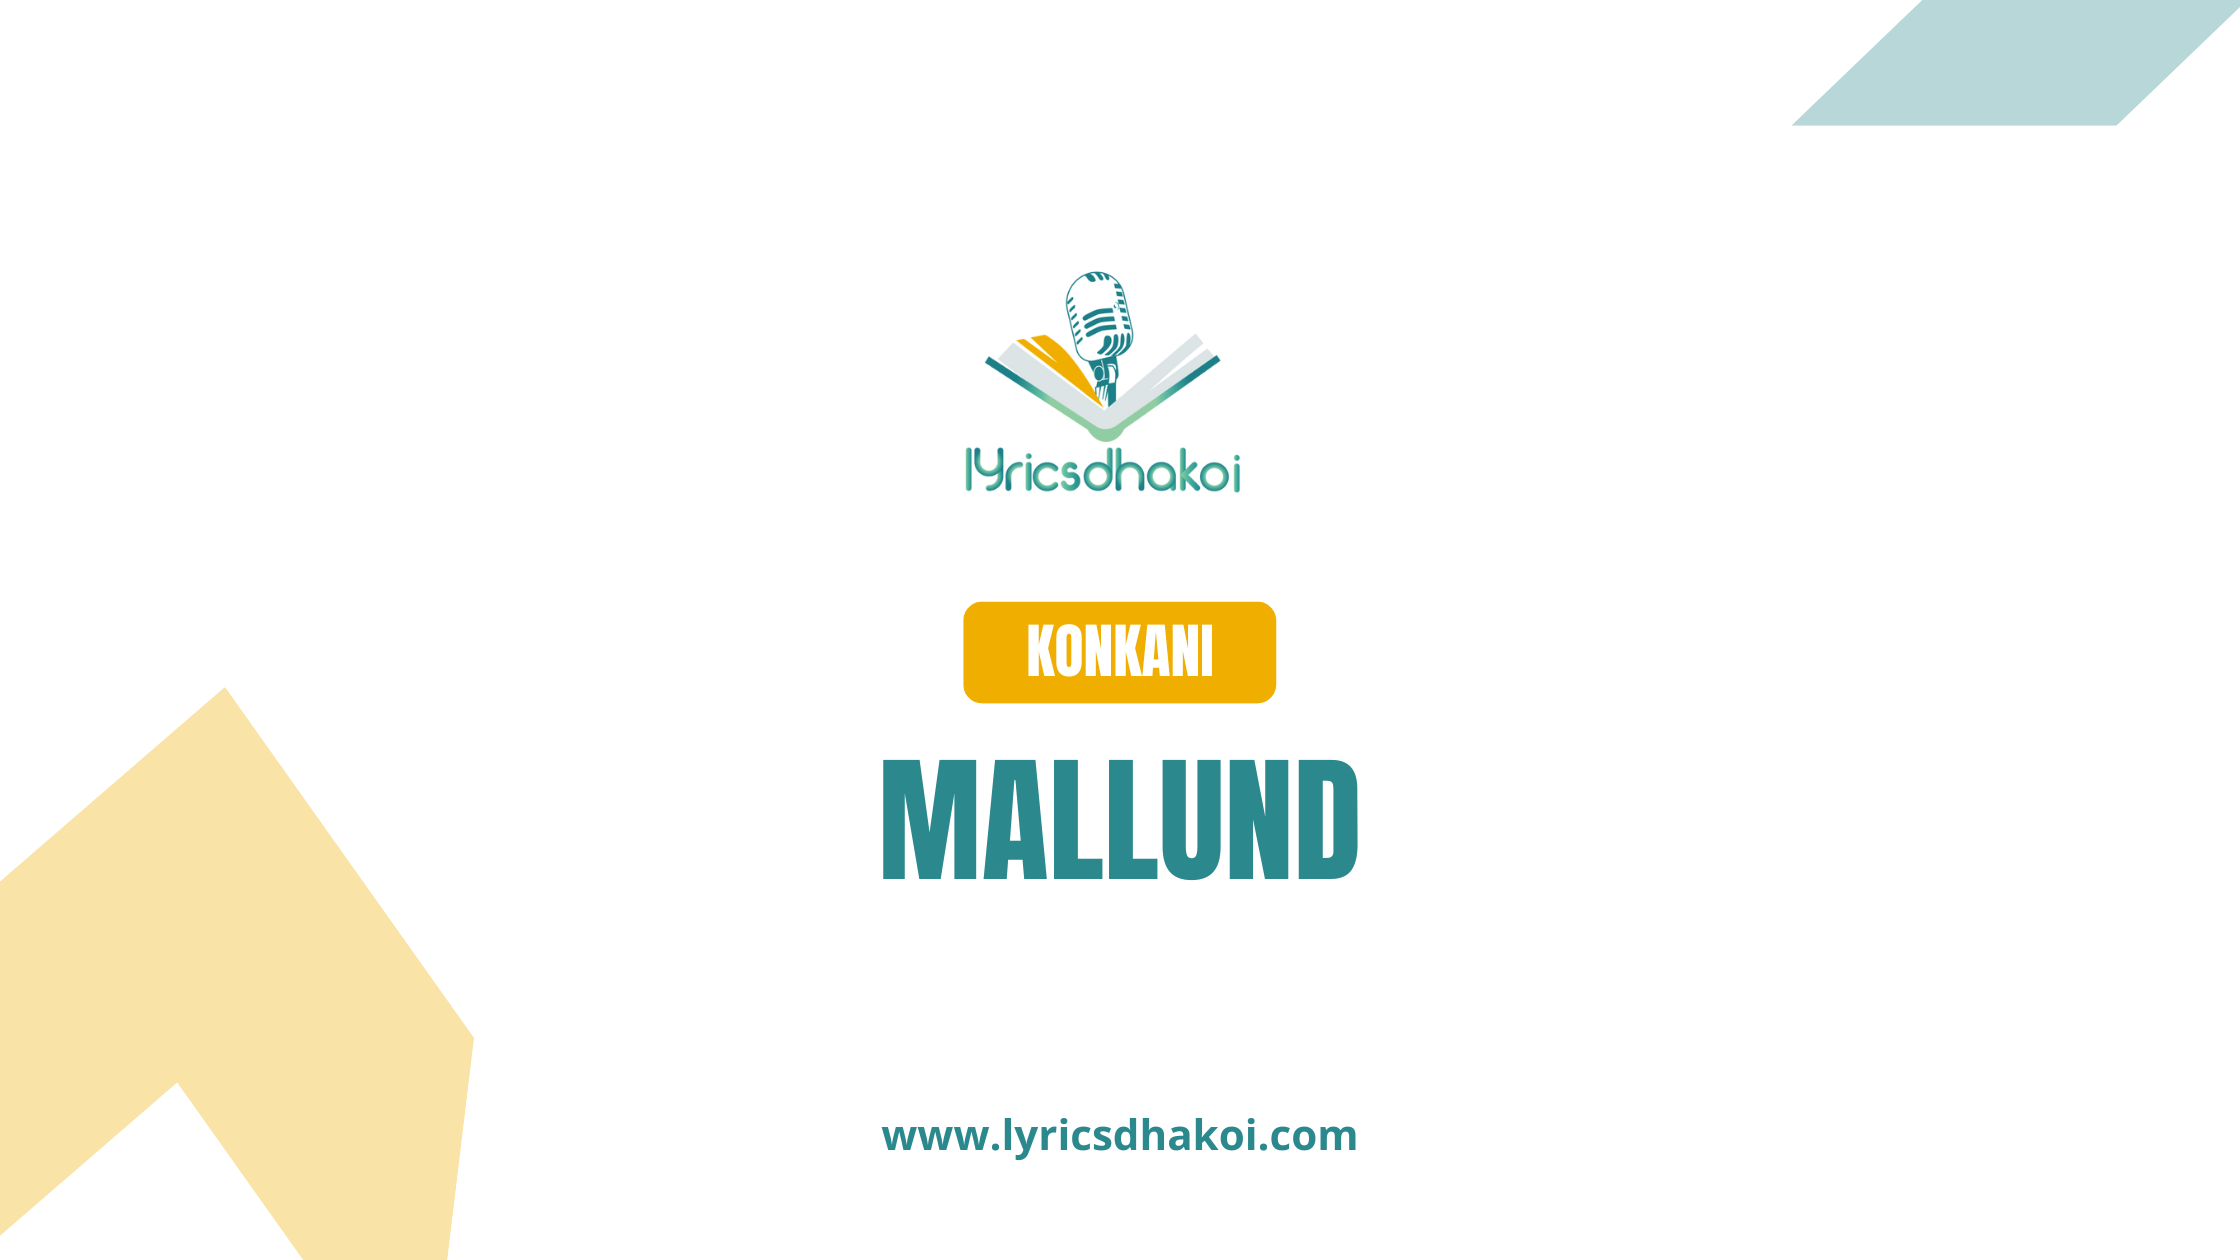 Mallund Konkani Lyrics for Karaoke Online - LyricsDhakoi.com